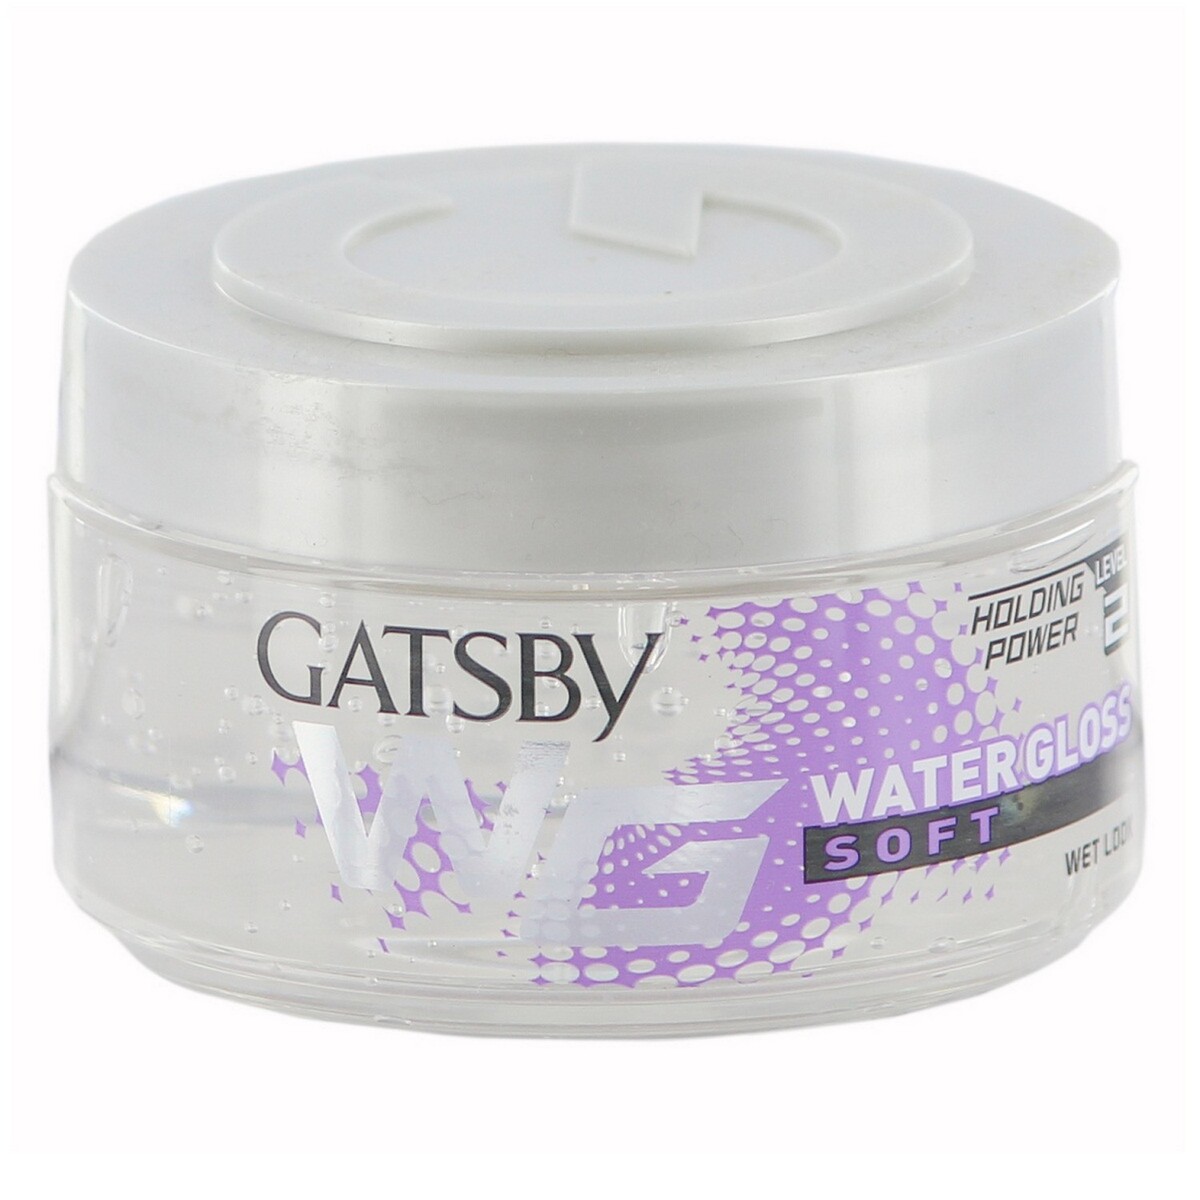 Gatsby Hair Gel Water Gloss Soft  300g